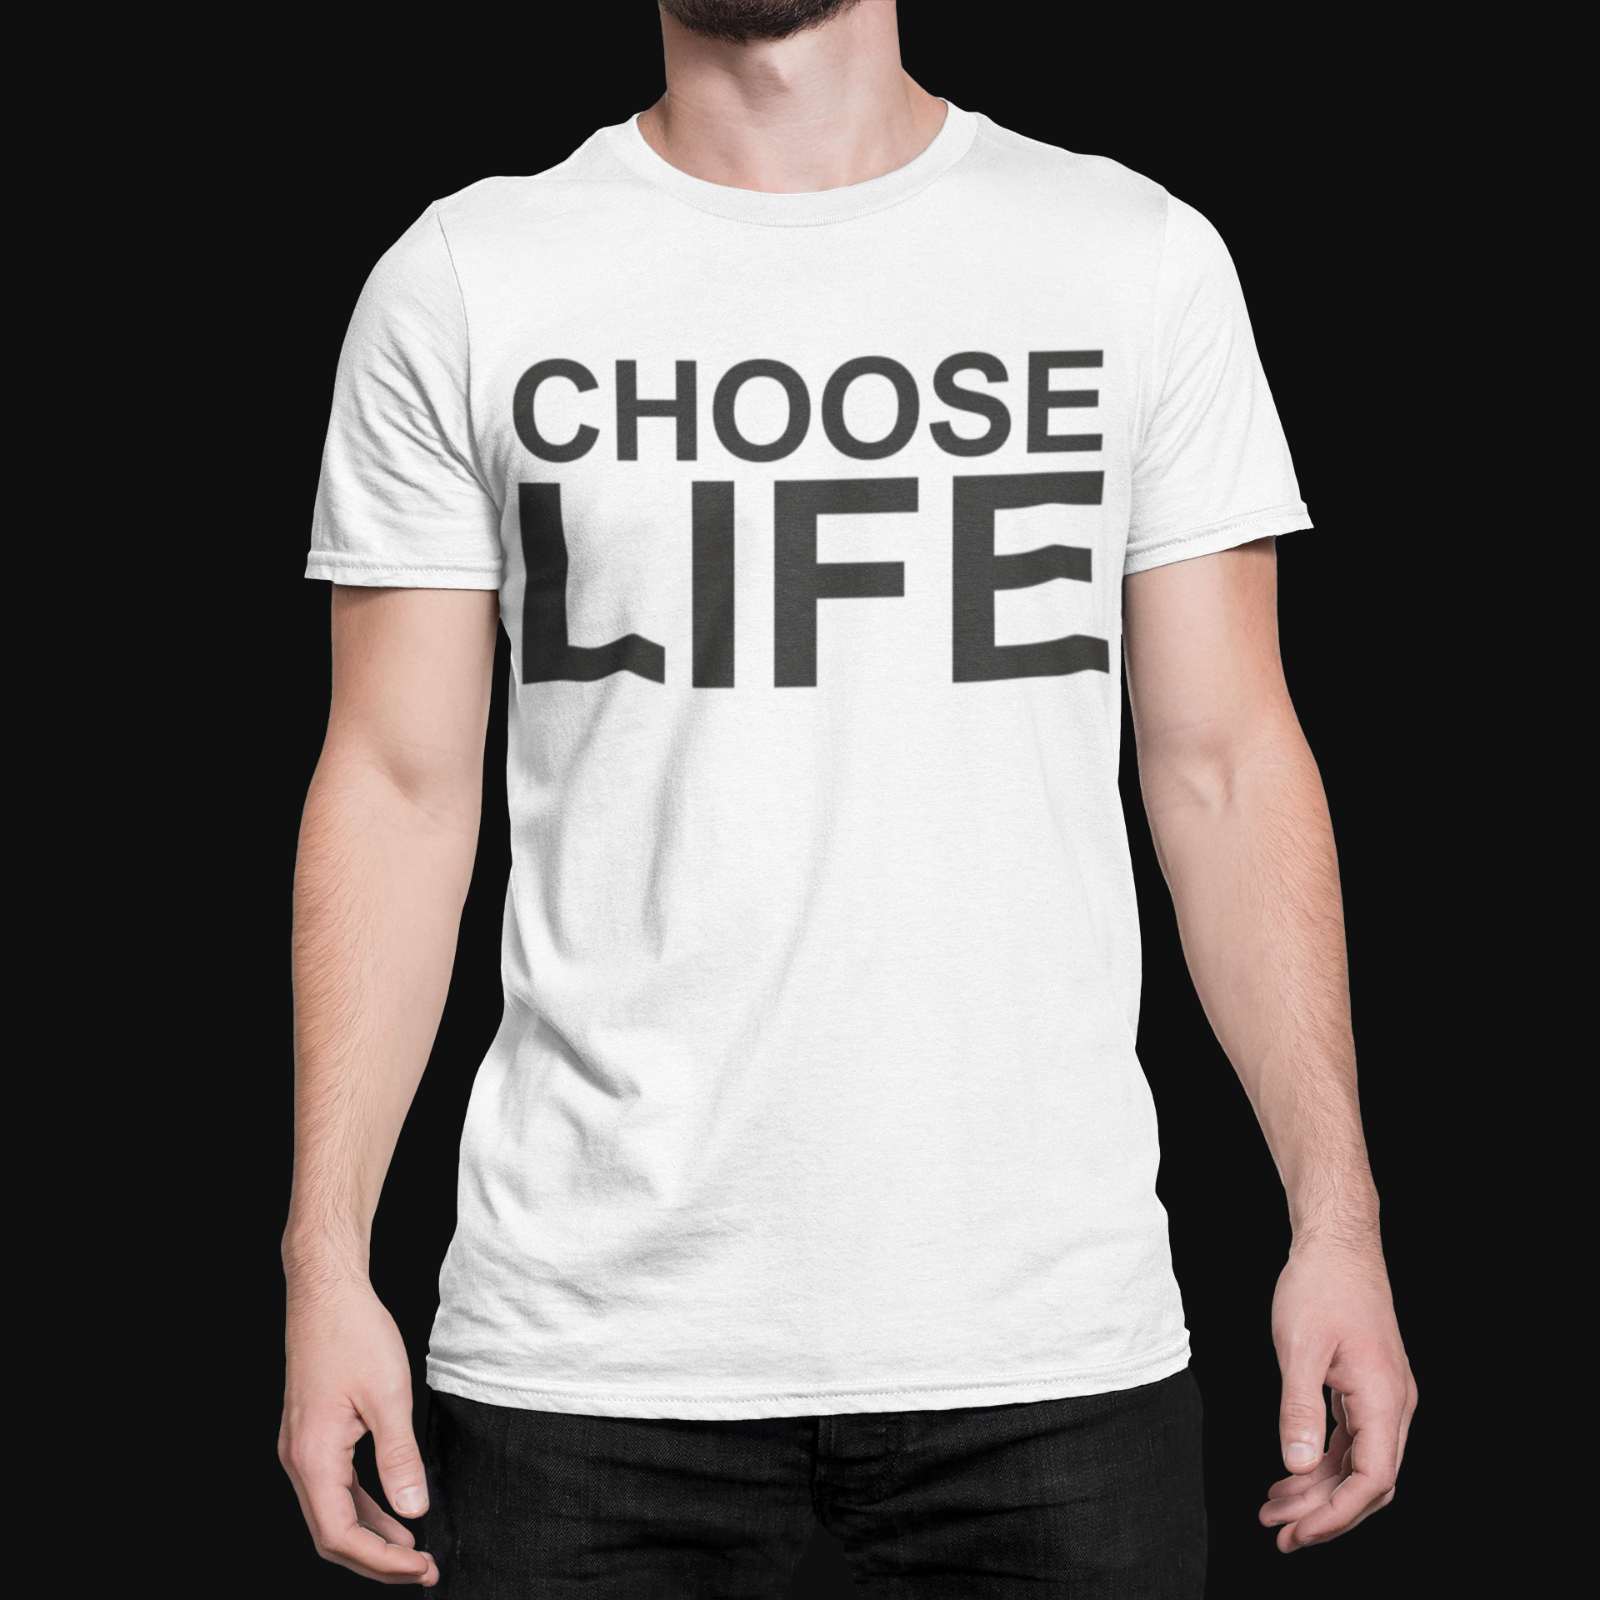 Choose Life T-Shirt - Wham - Music - Cool - 80's - 90's Retro - Throwback